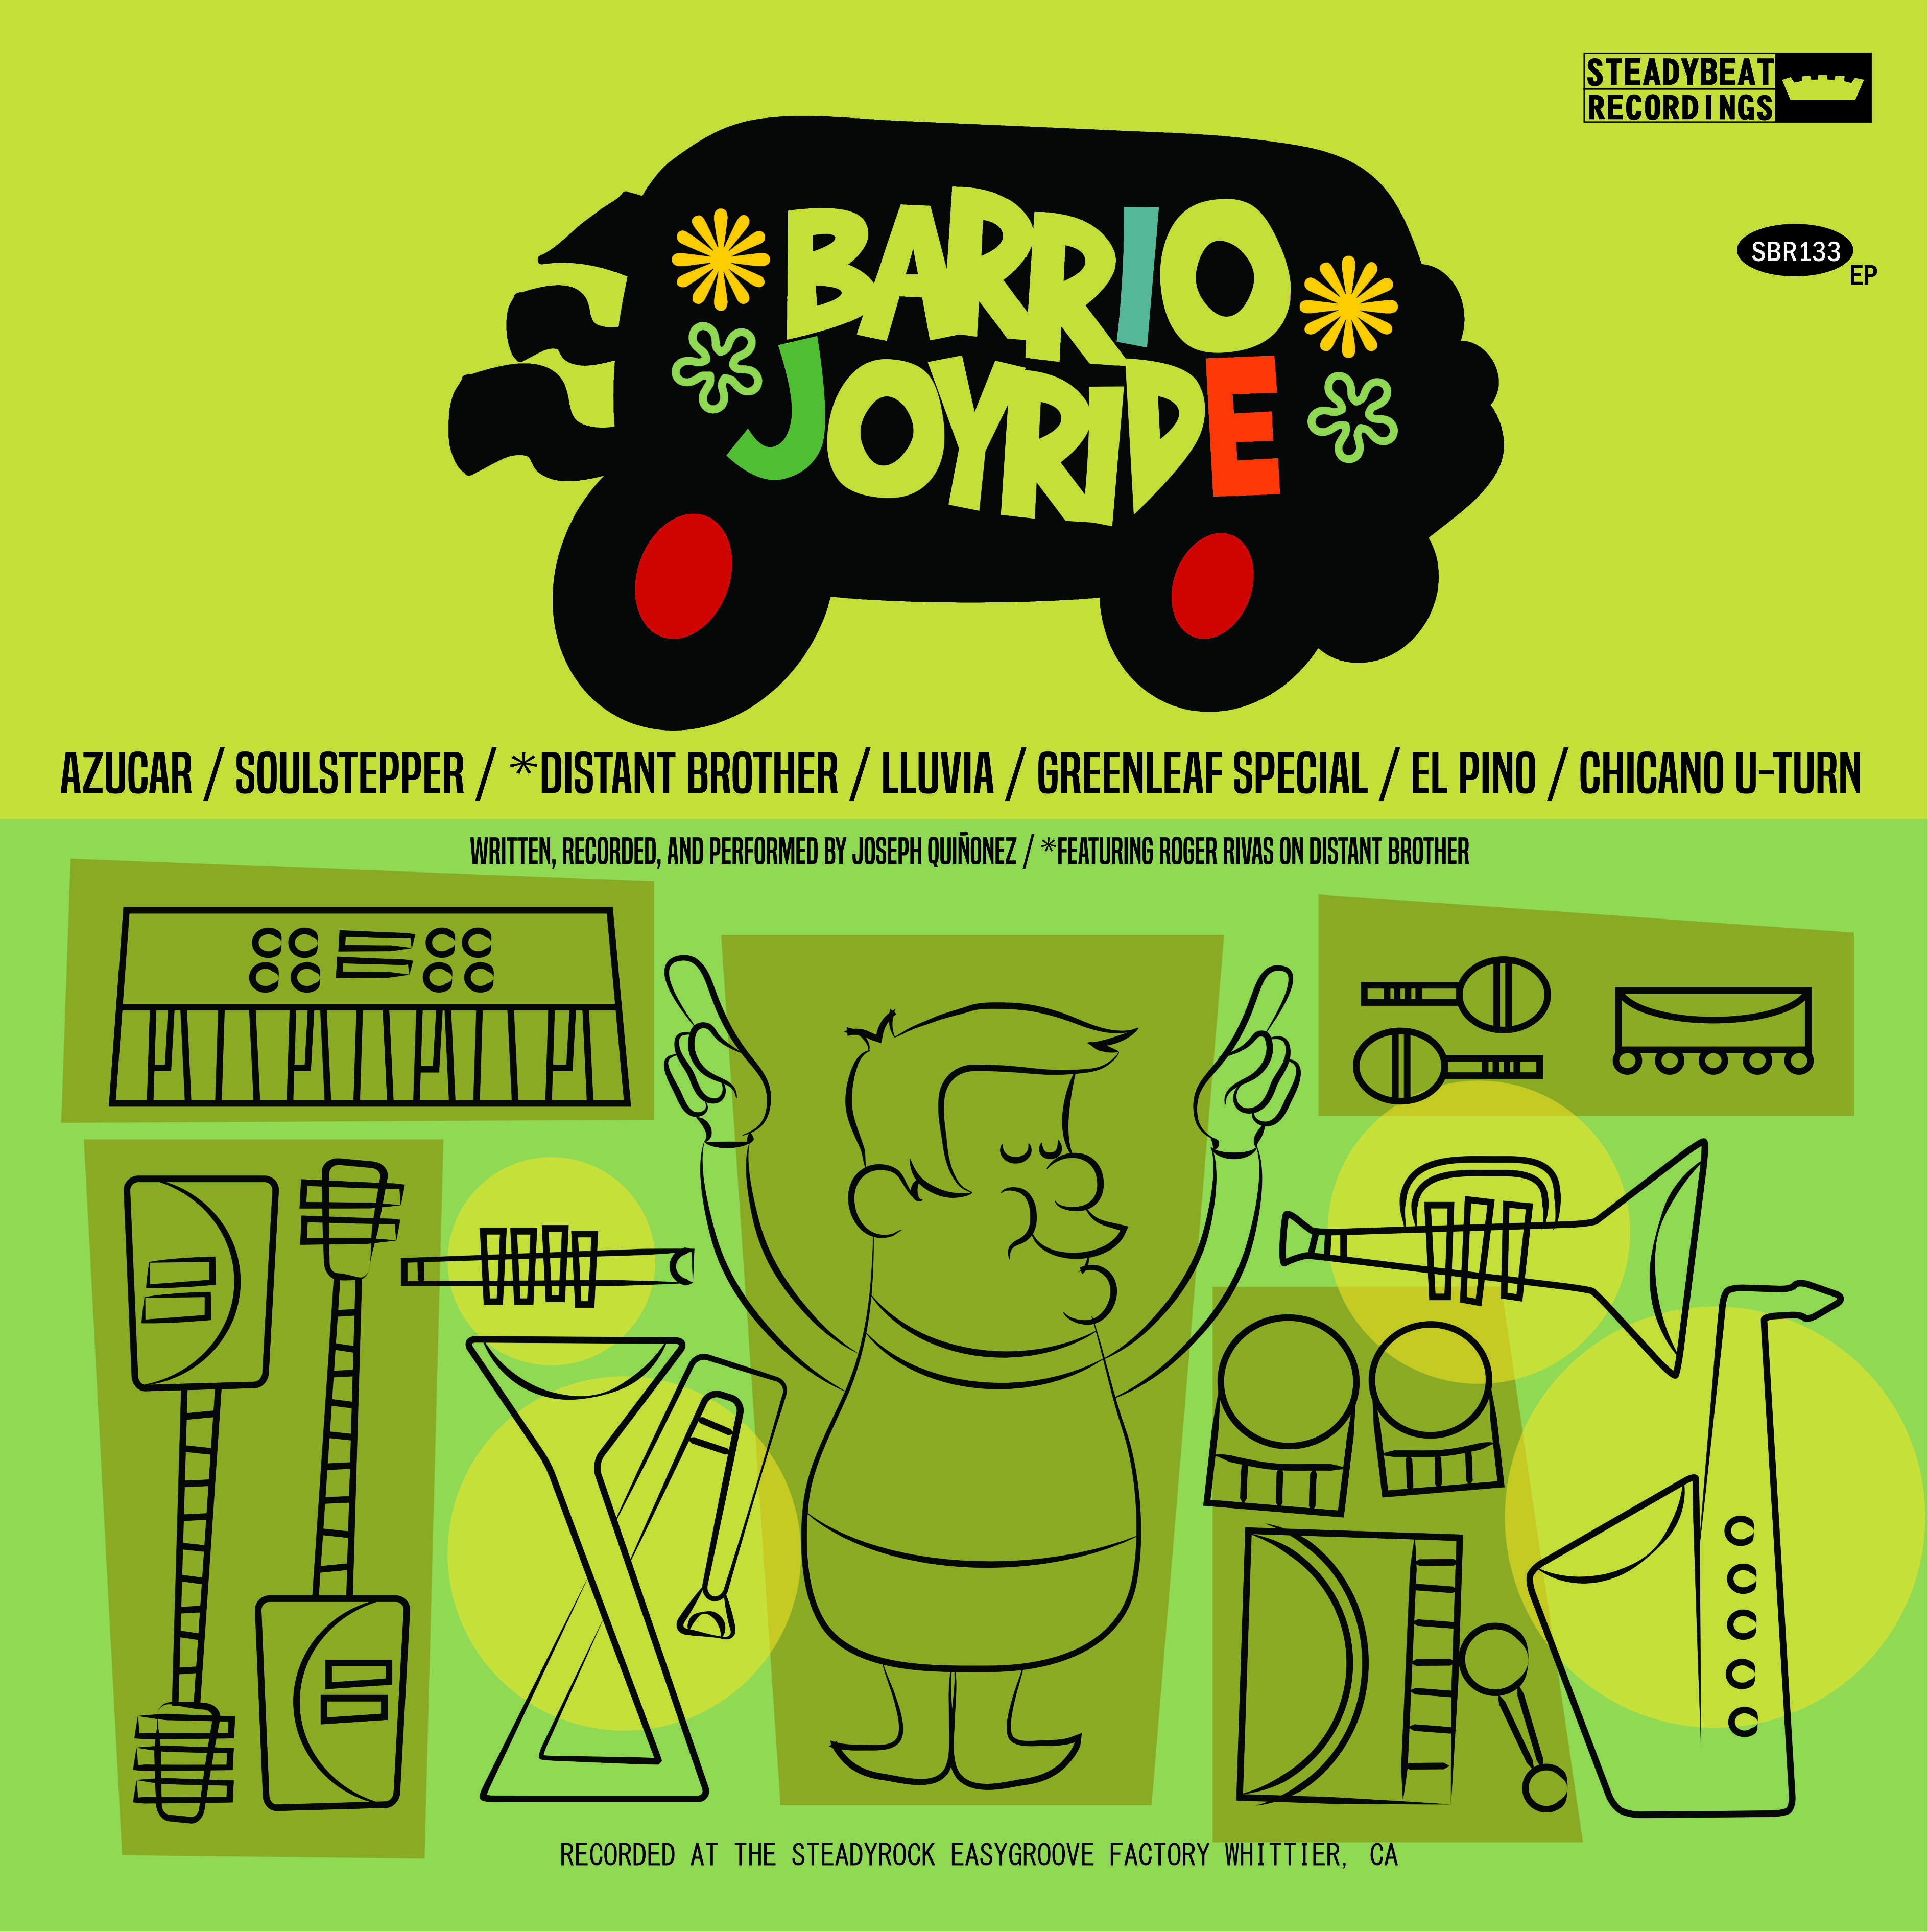 SBR133 LP  Saucy Horn -Barrio Joyride  LP Album Vinyl